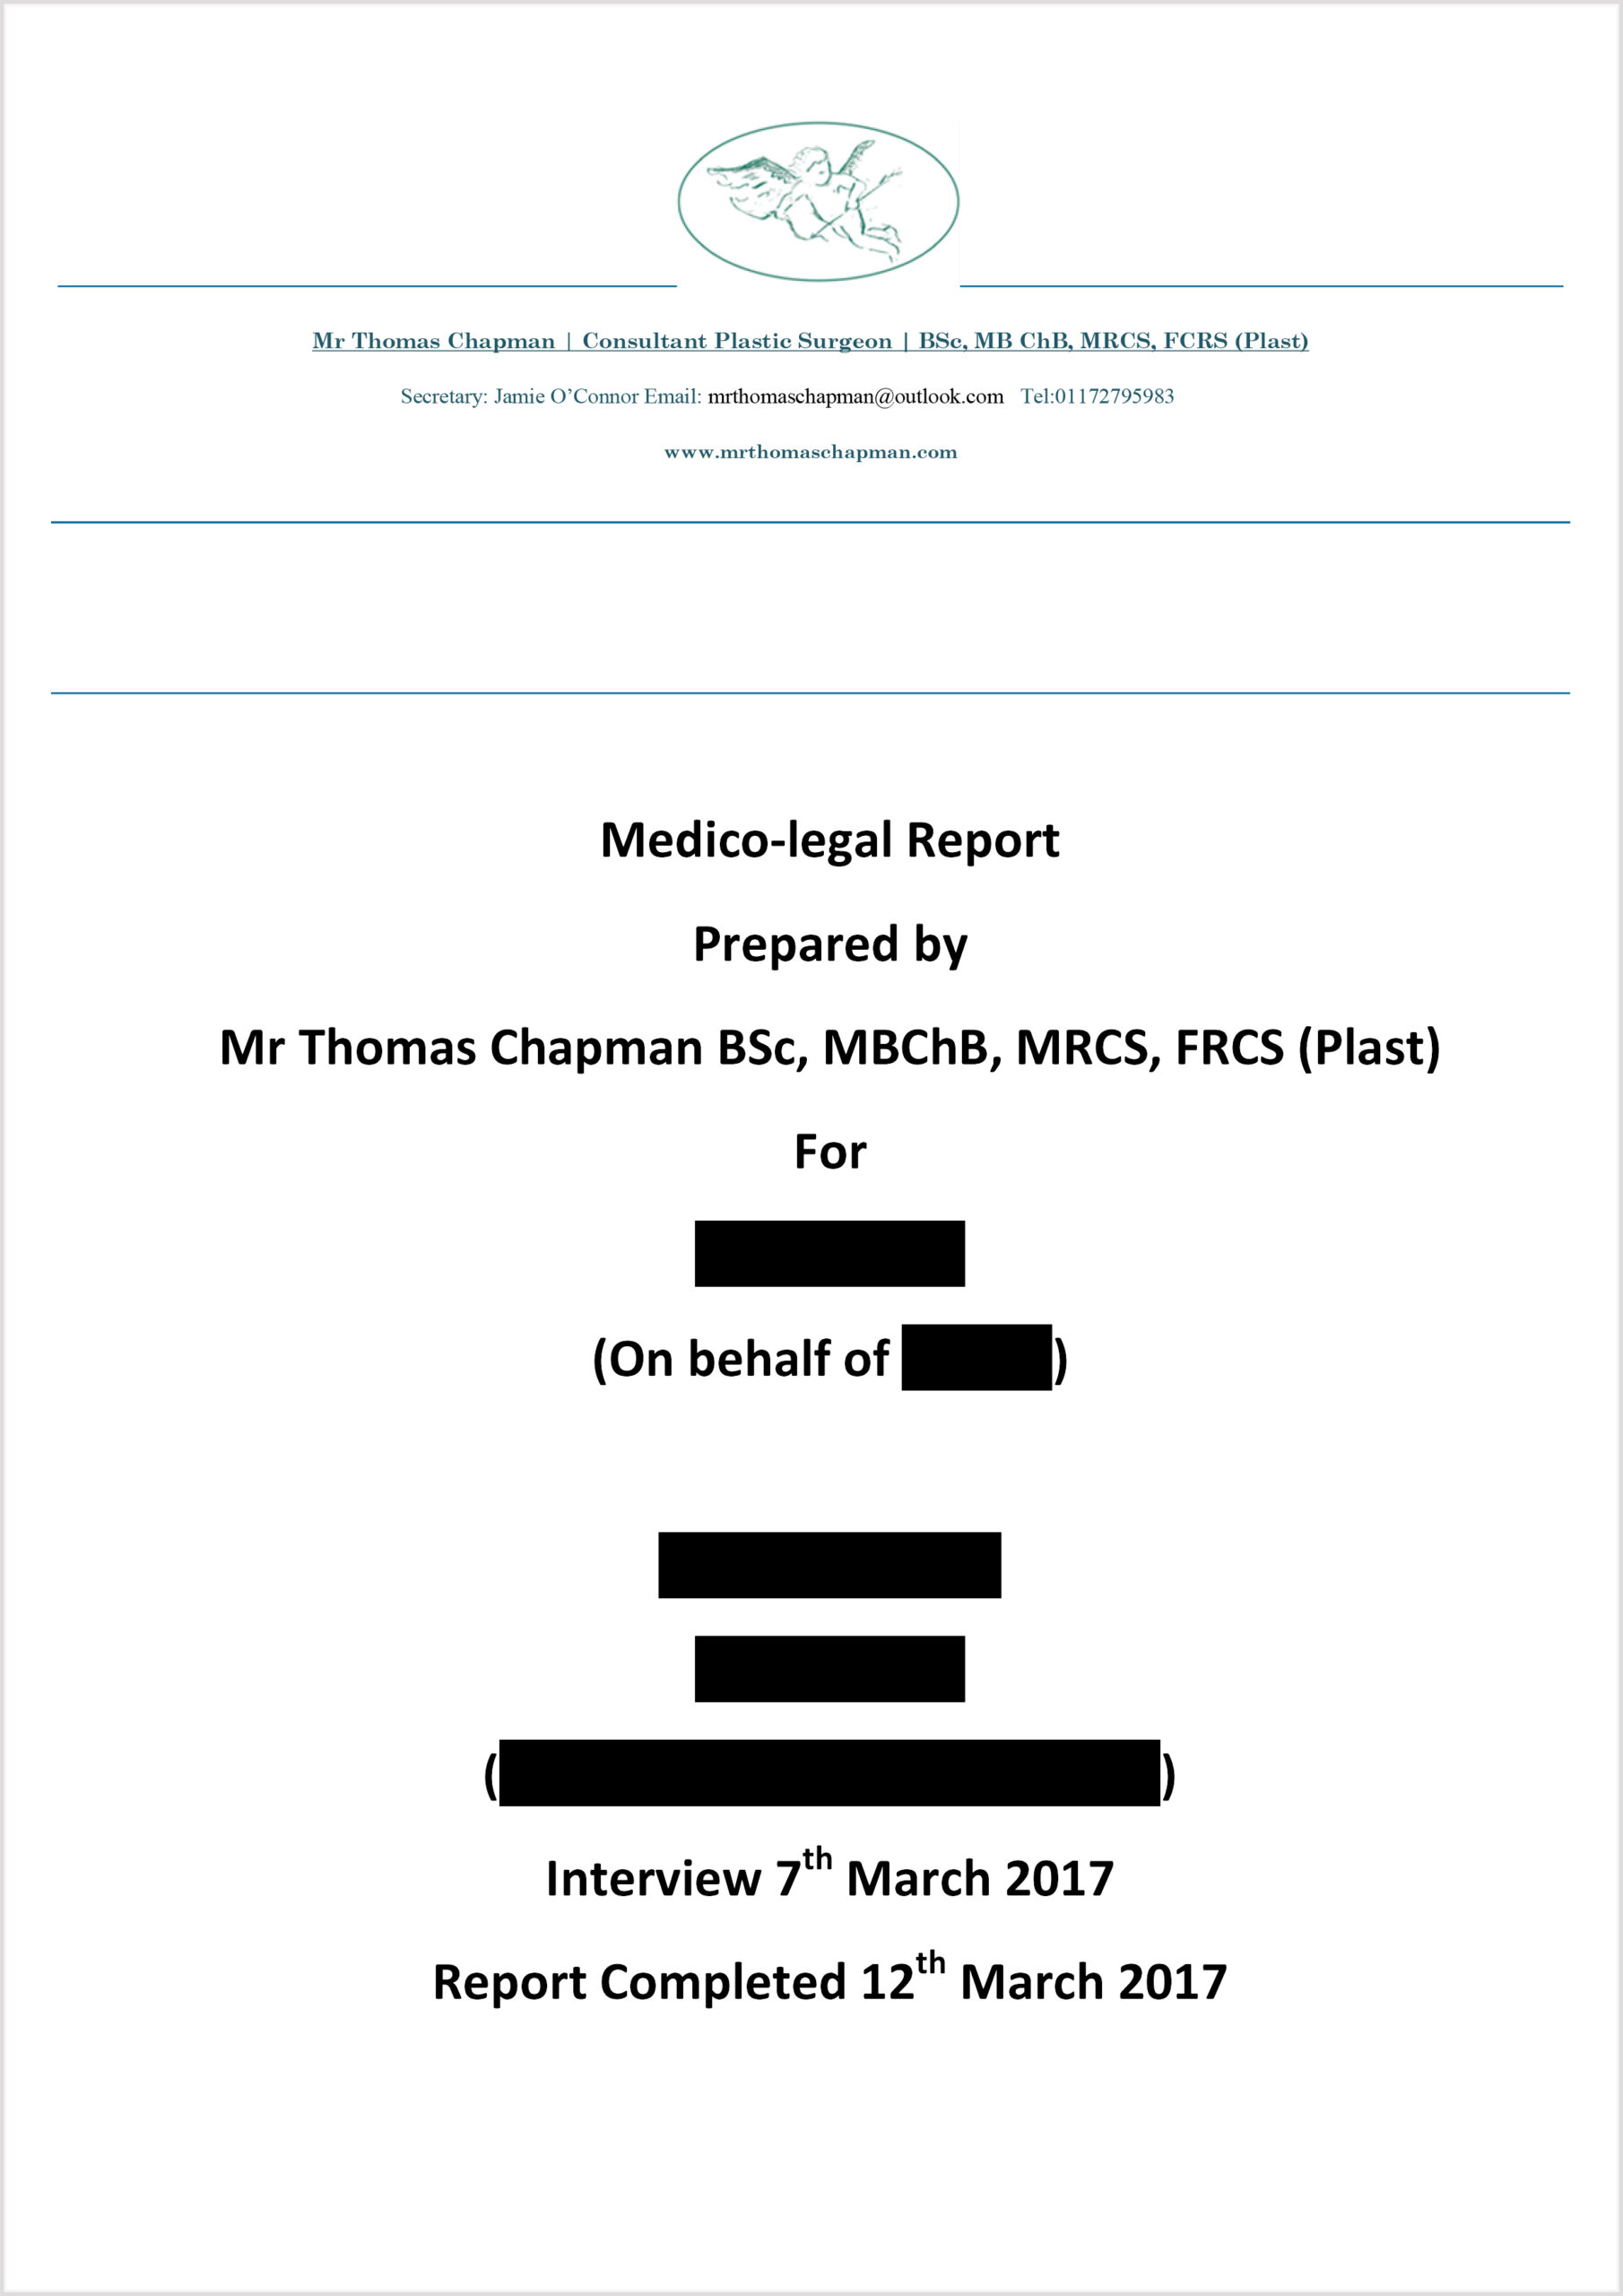 Medicolegal Reporting - Mr Thomas Chapman Within Medical Legal Report Template